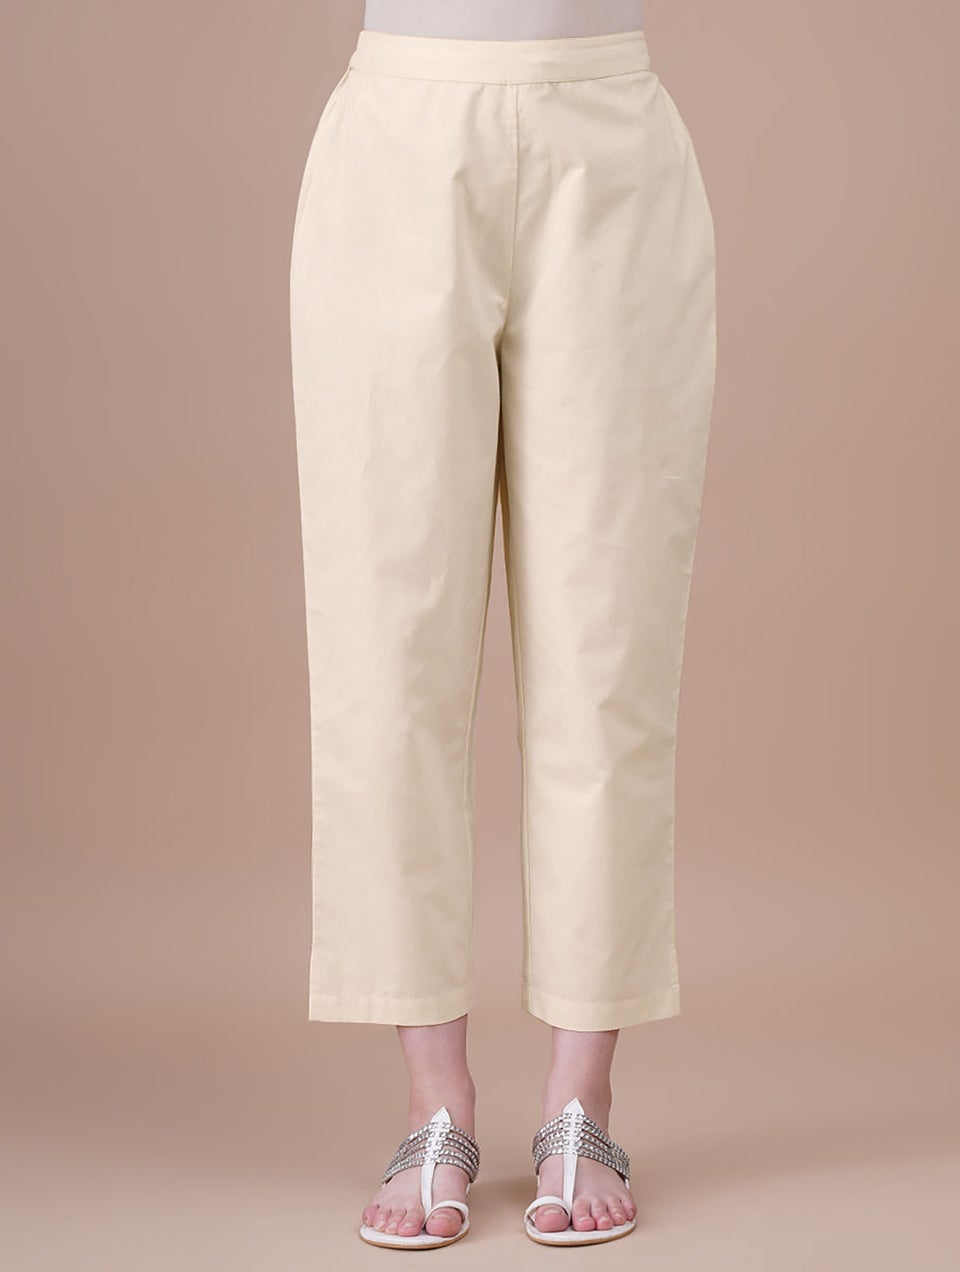 Ivory Elasticated Waist Cotton Pants - XS